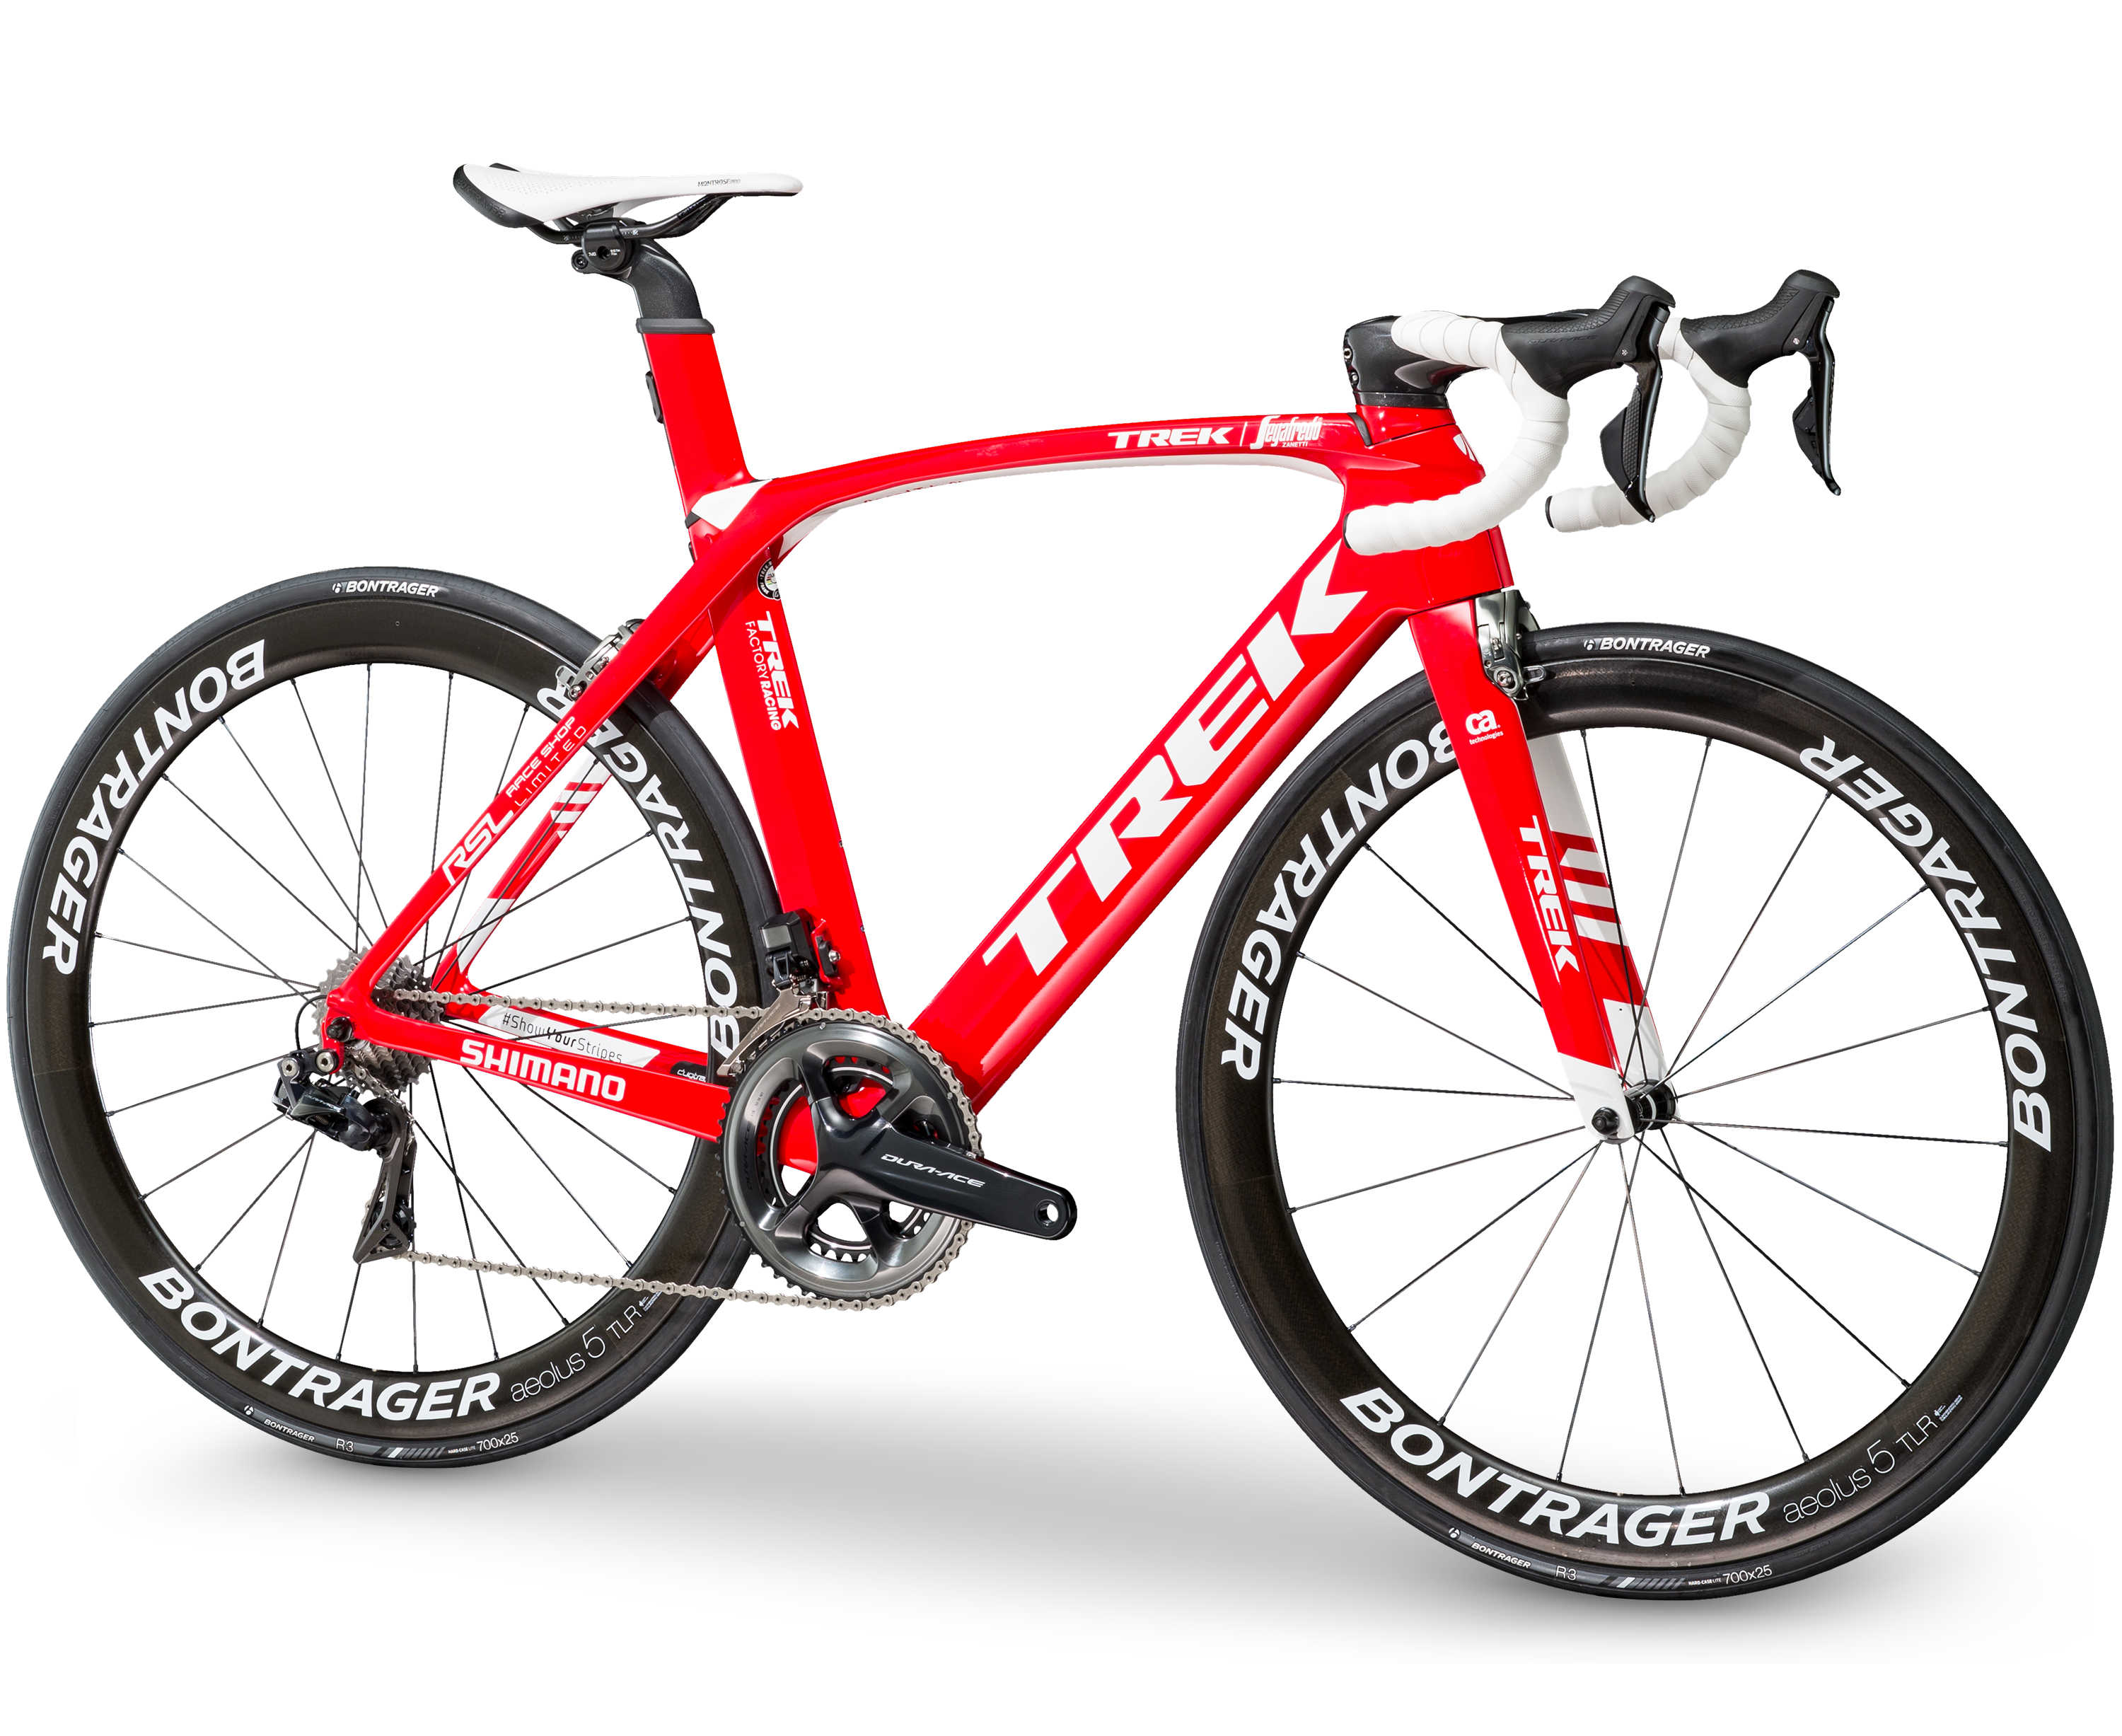 Xe đạp đua Trek Madone Race Shop Limited đỏ red